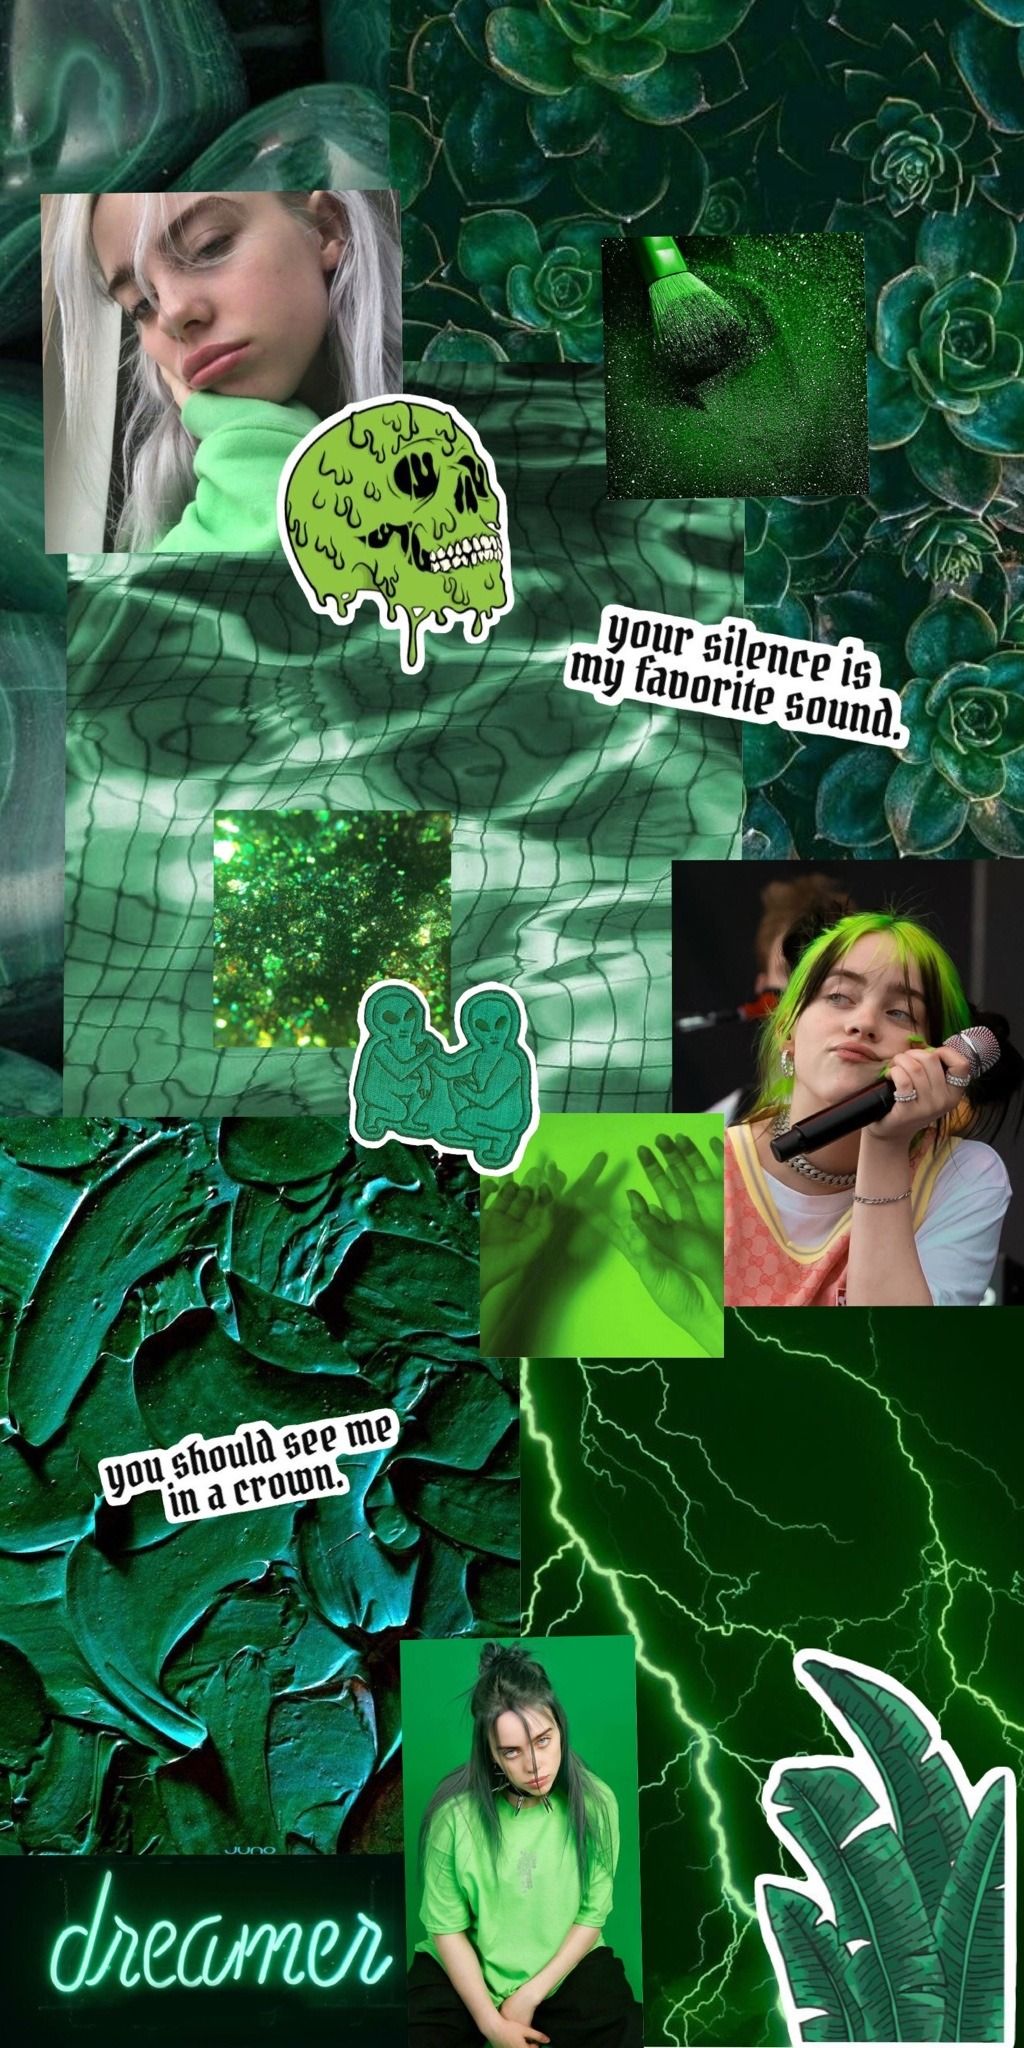 Aesthetic green collage with Billie Eilish and lightning. - Billie Eilish